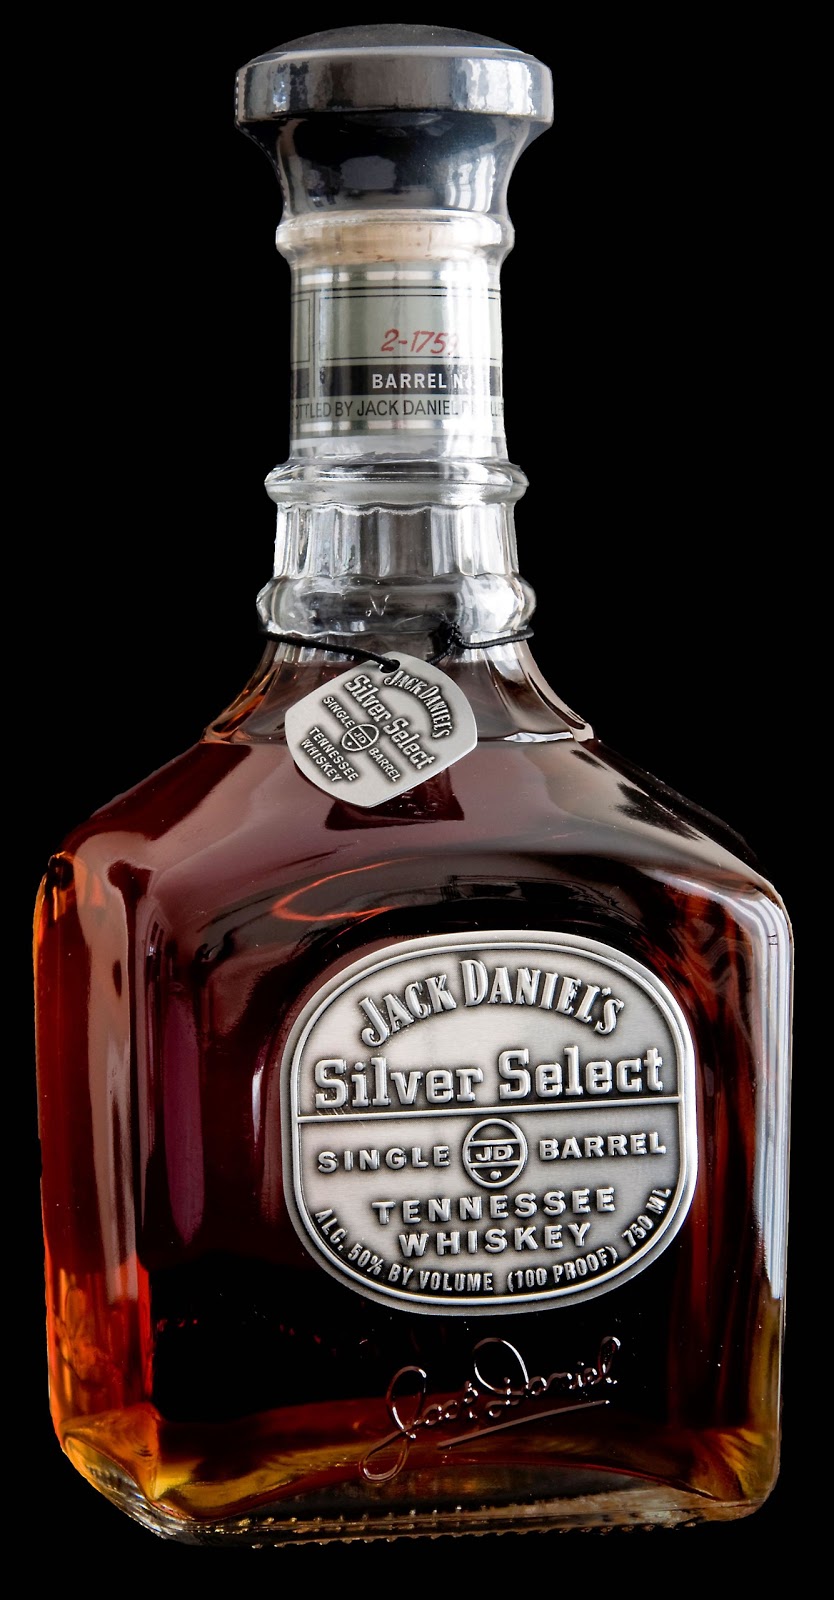 Bar on the wall: JACK DANIEL'S SINGLE BARREL SILVER SELECT Whiskey